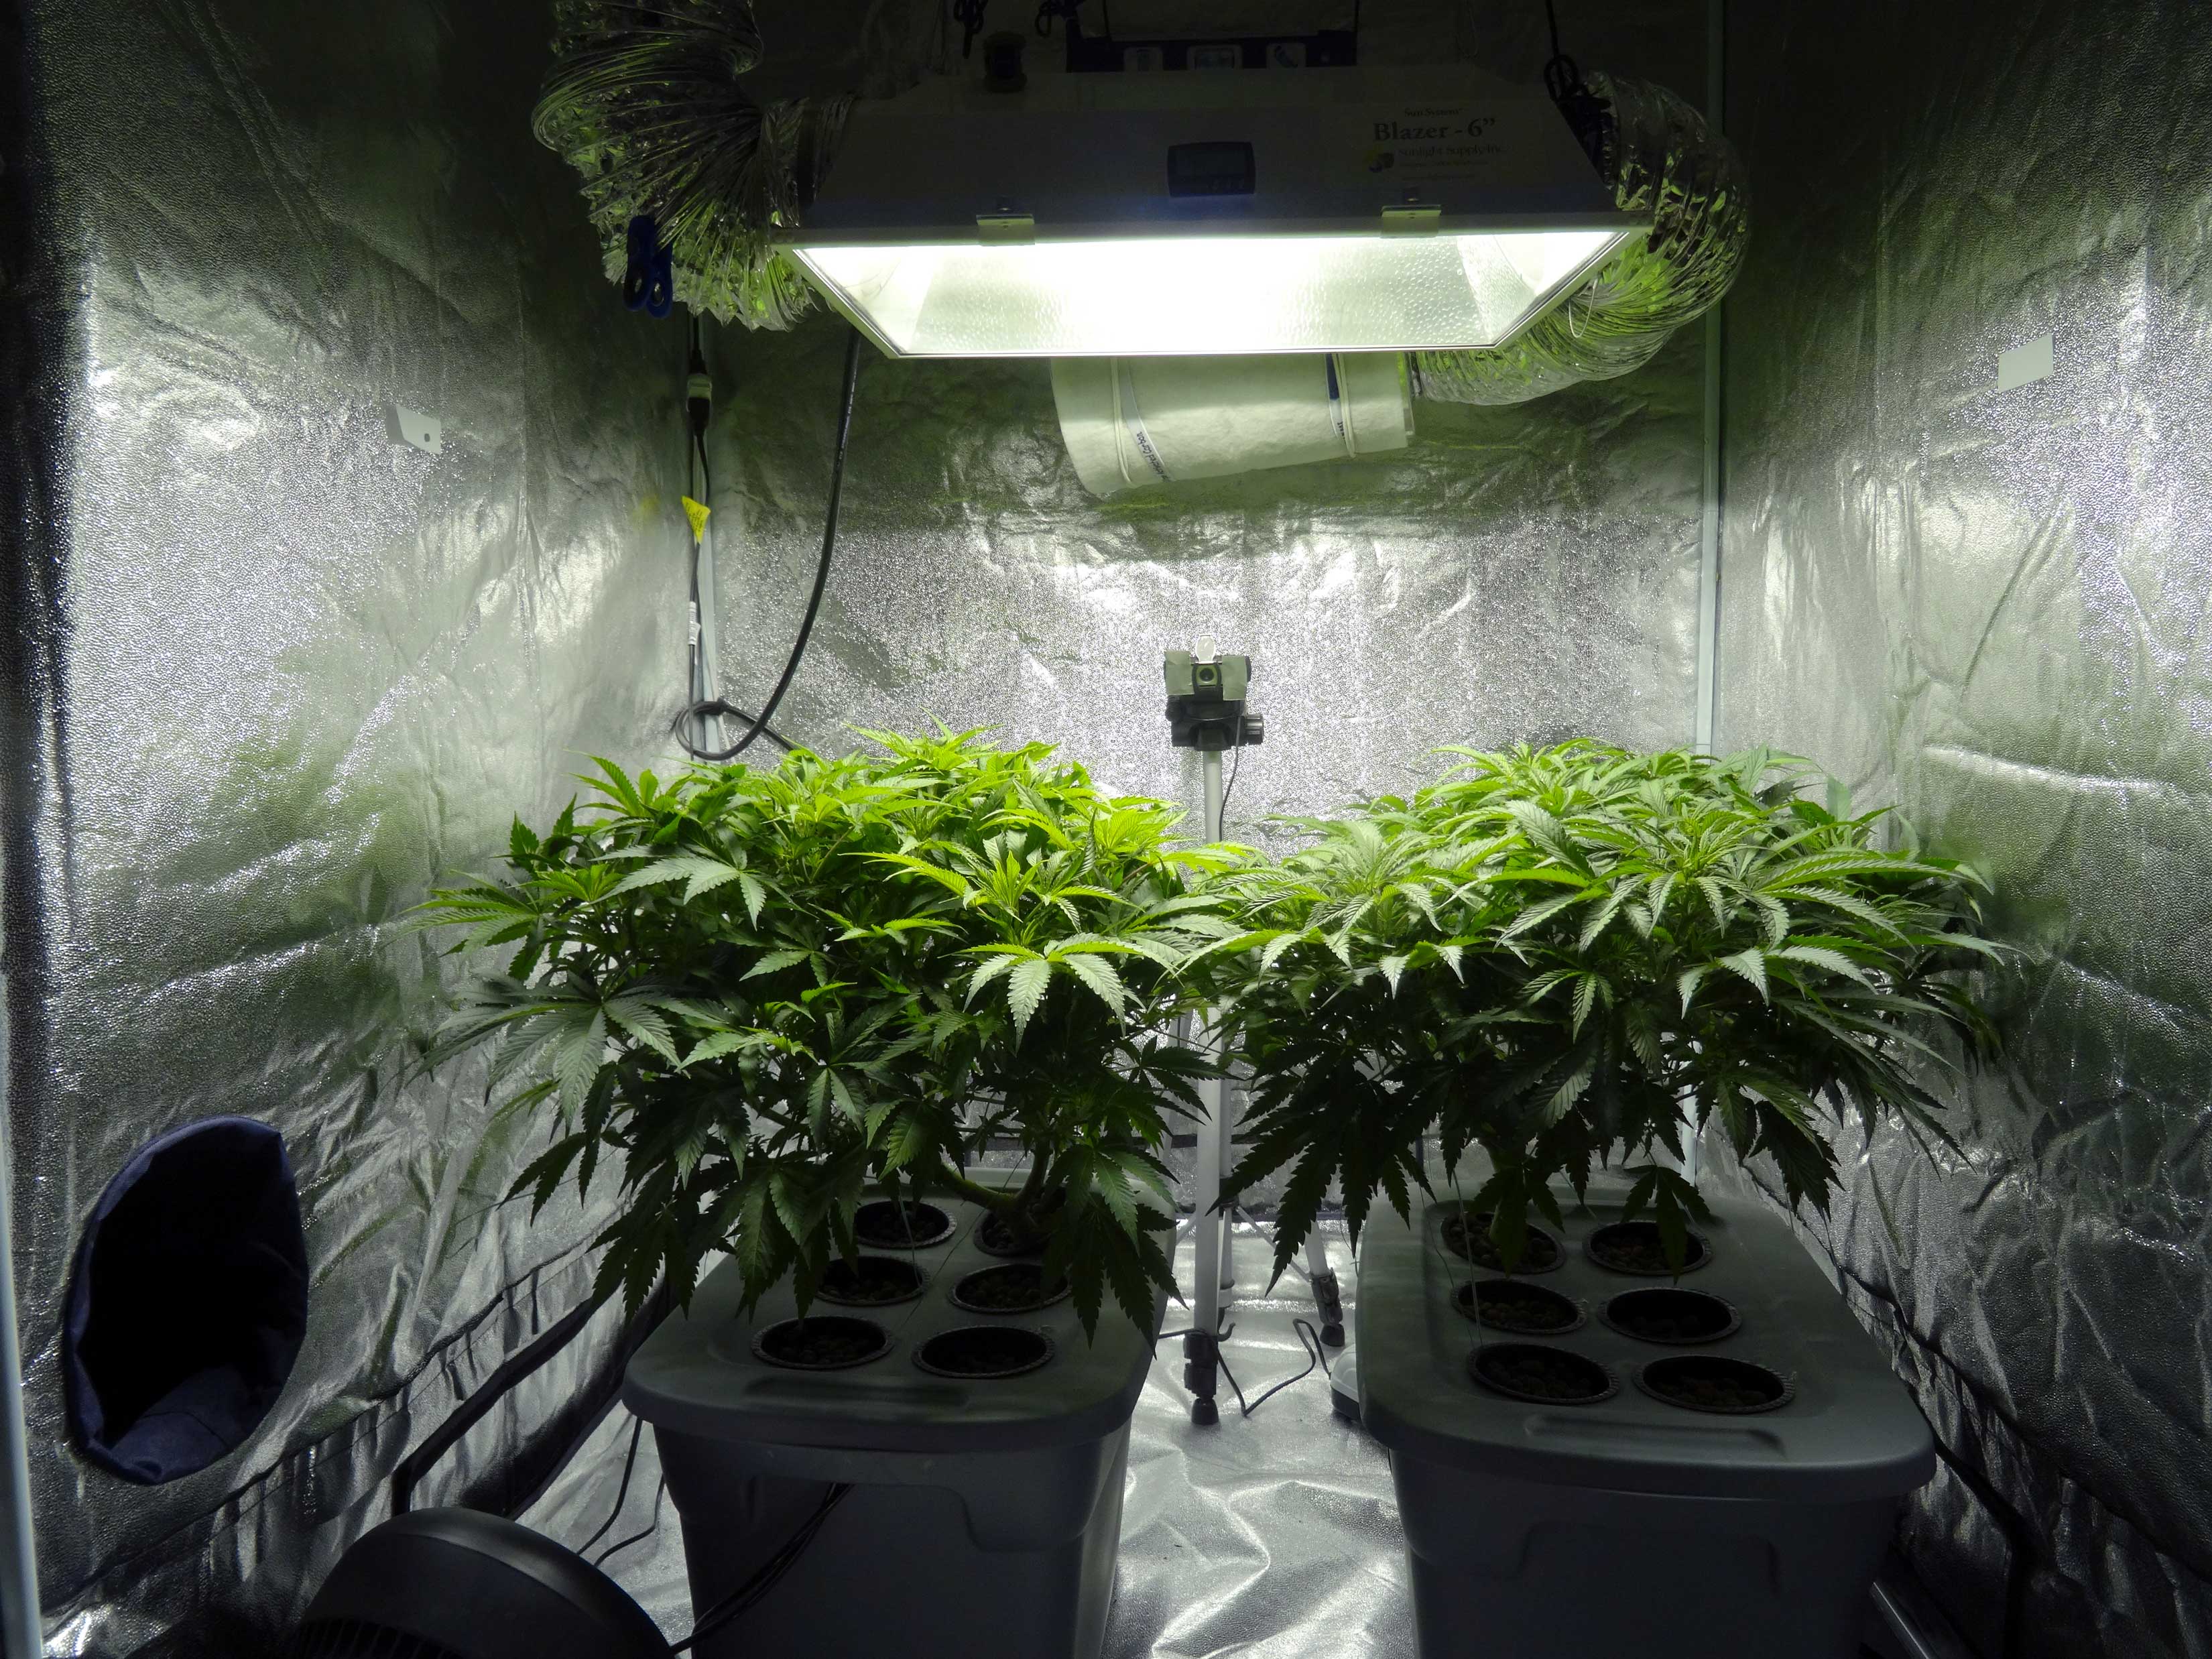 Brighton and Hove News » Police find cannabis farm in tent inside Brighton loft